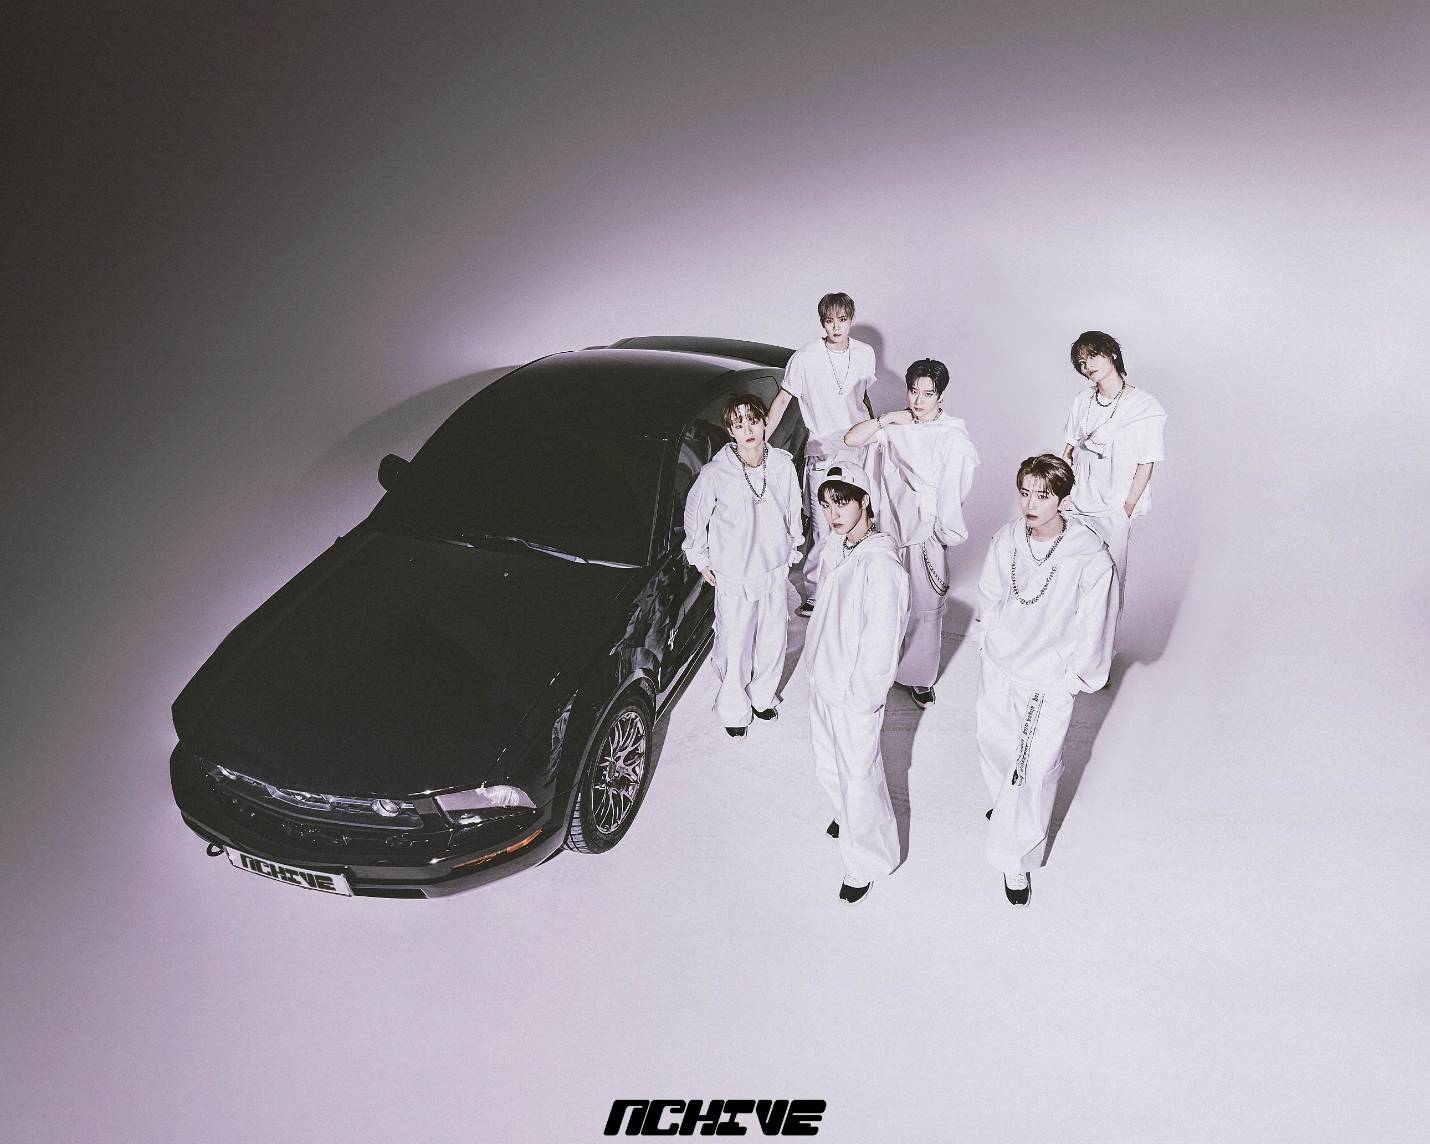 NCHIVE デビューアルバム「Dreive」のグループコンセプトフォト&ユチャン、ジュヨン、エンの個人コンセプトフォトを公開